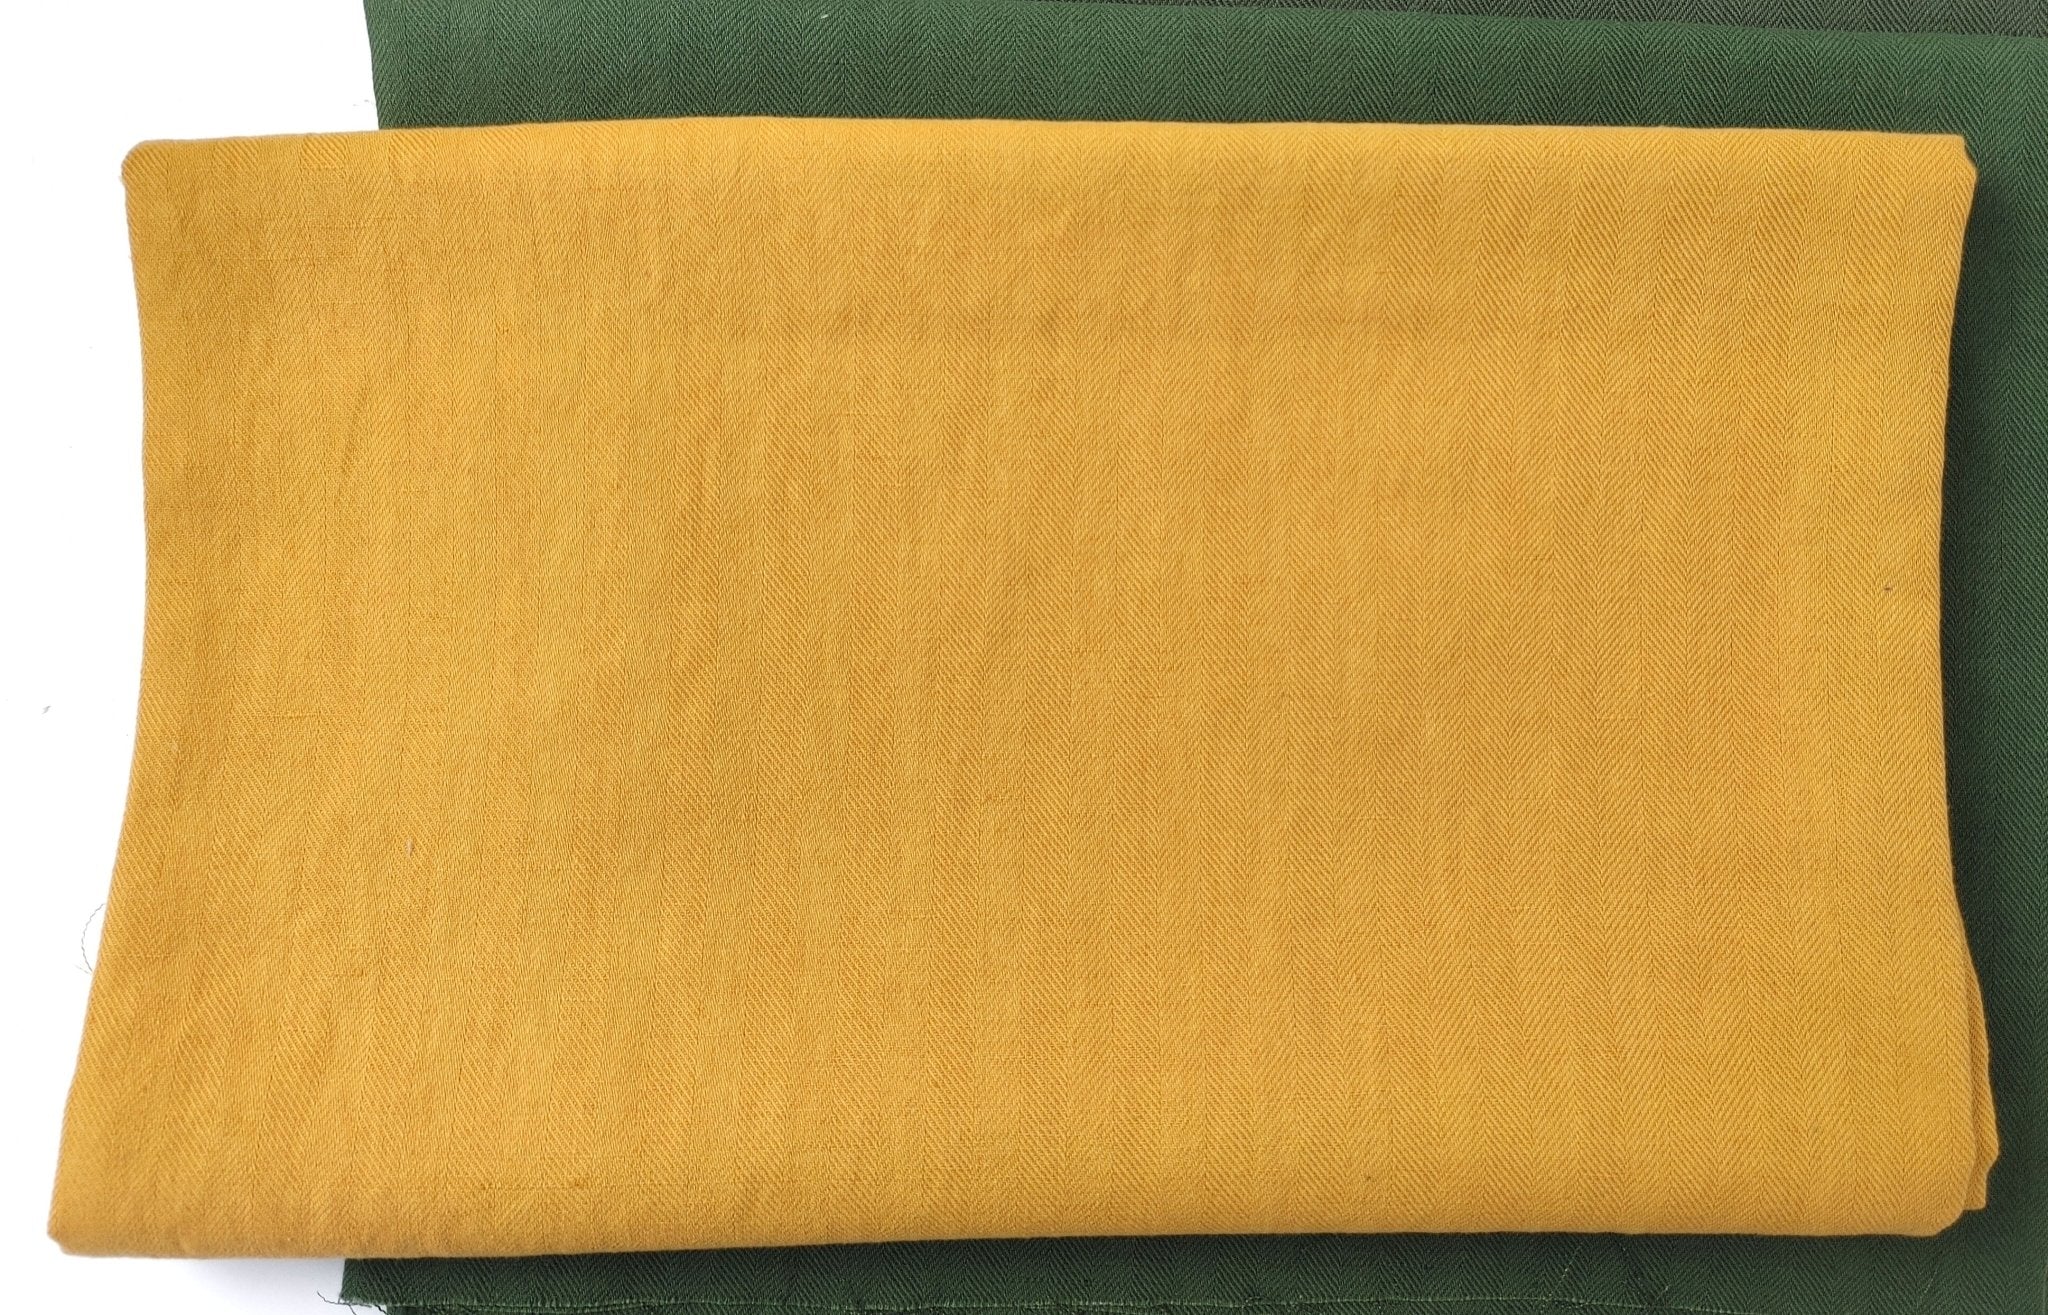 Linen Cotton HBT Herringbone Twill Solid Fabric Medium Weight 6678 6707 6820 7095 7659 7660 7661 - The Linen Lab - Mustard